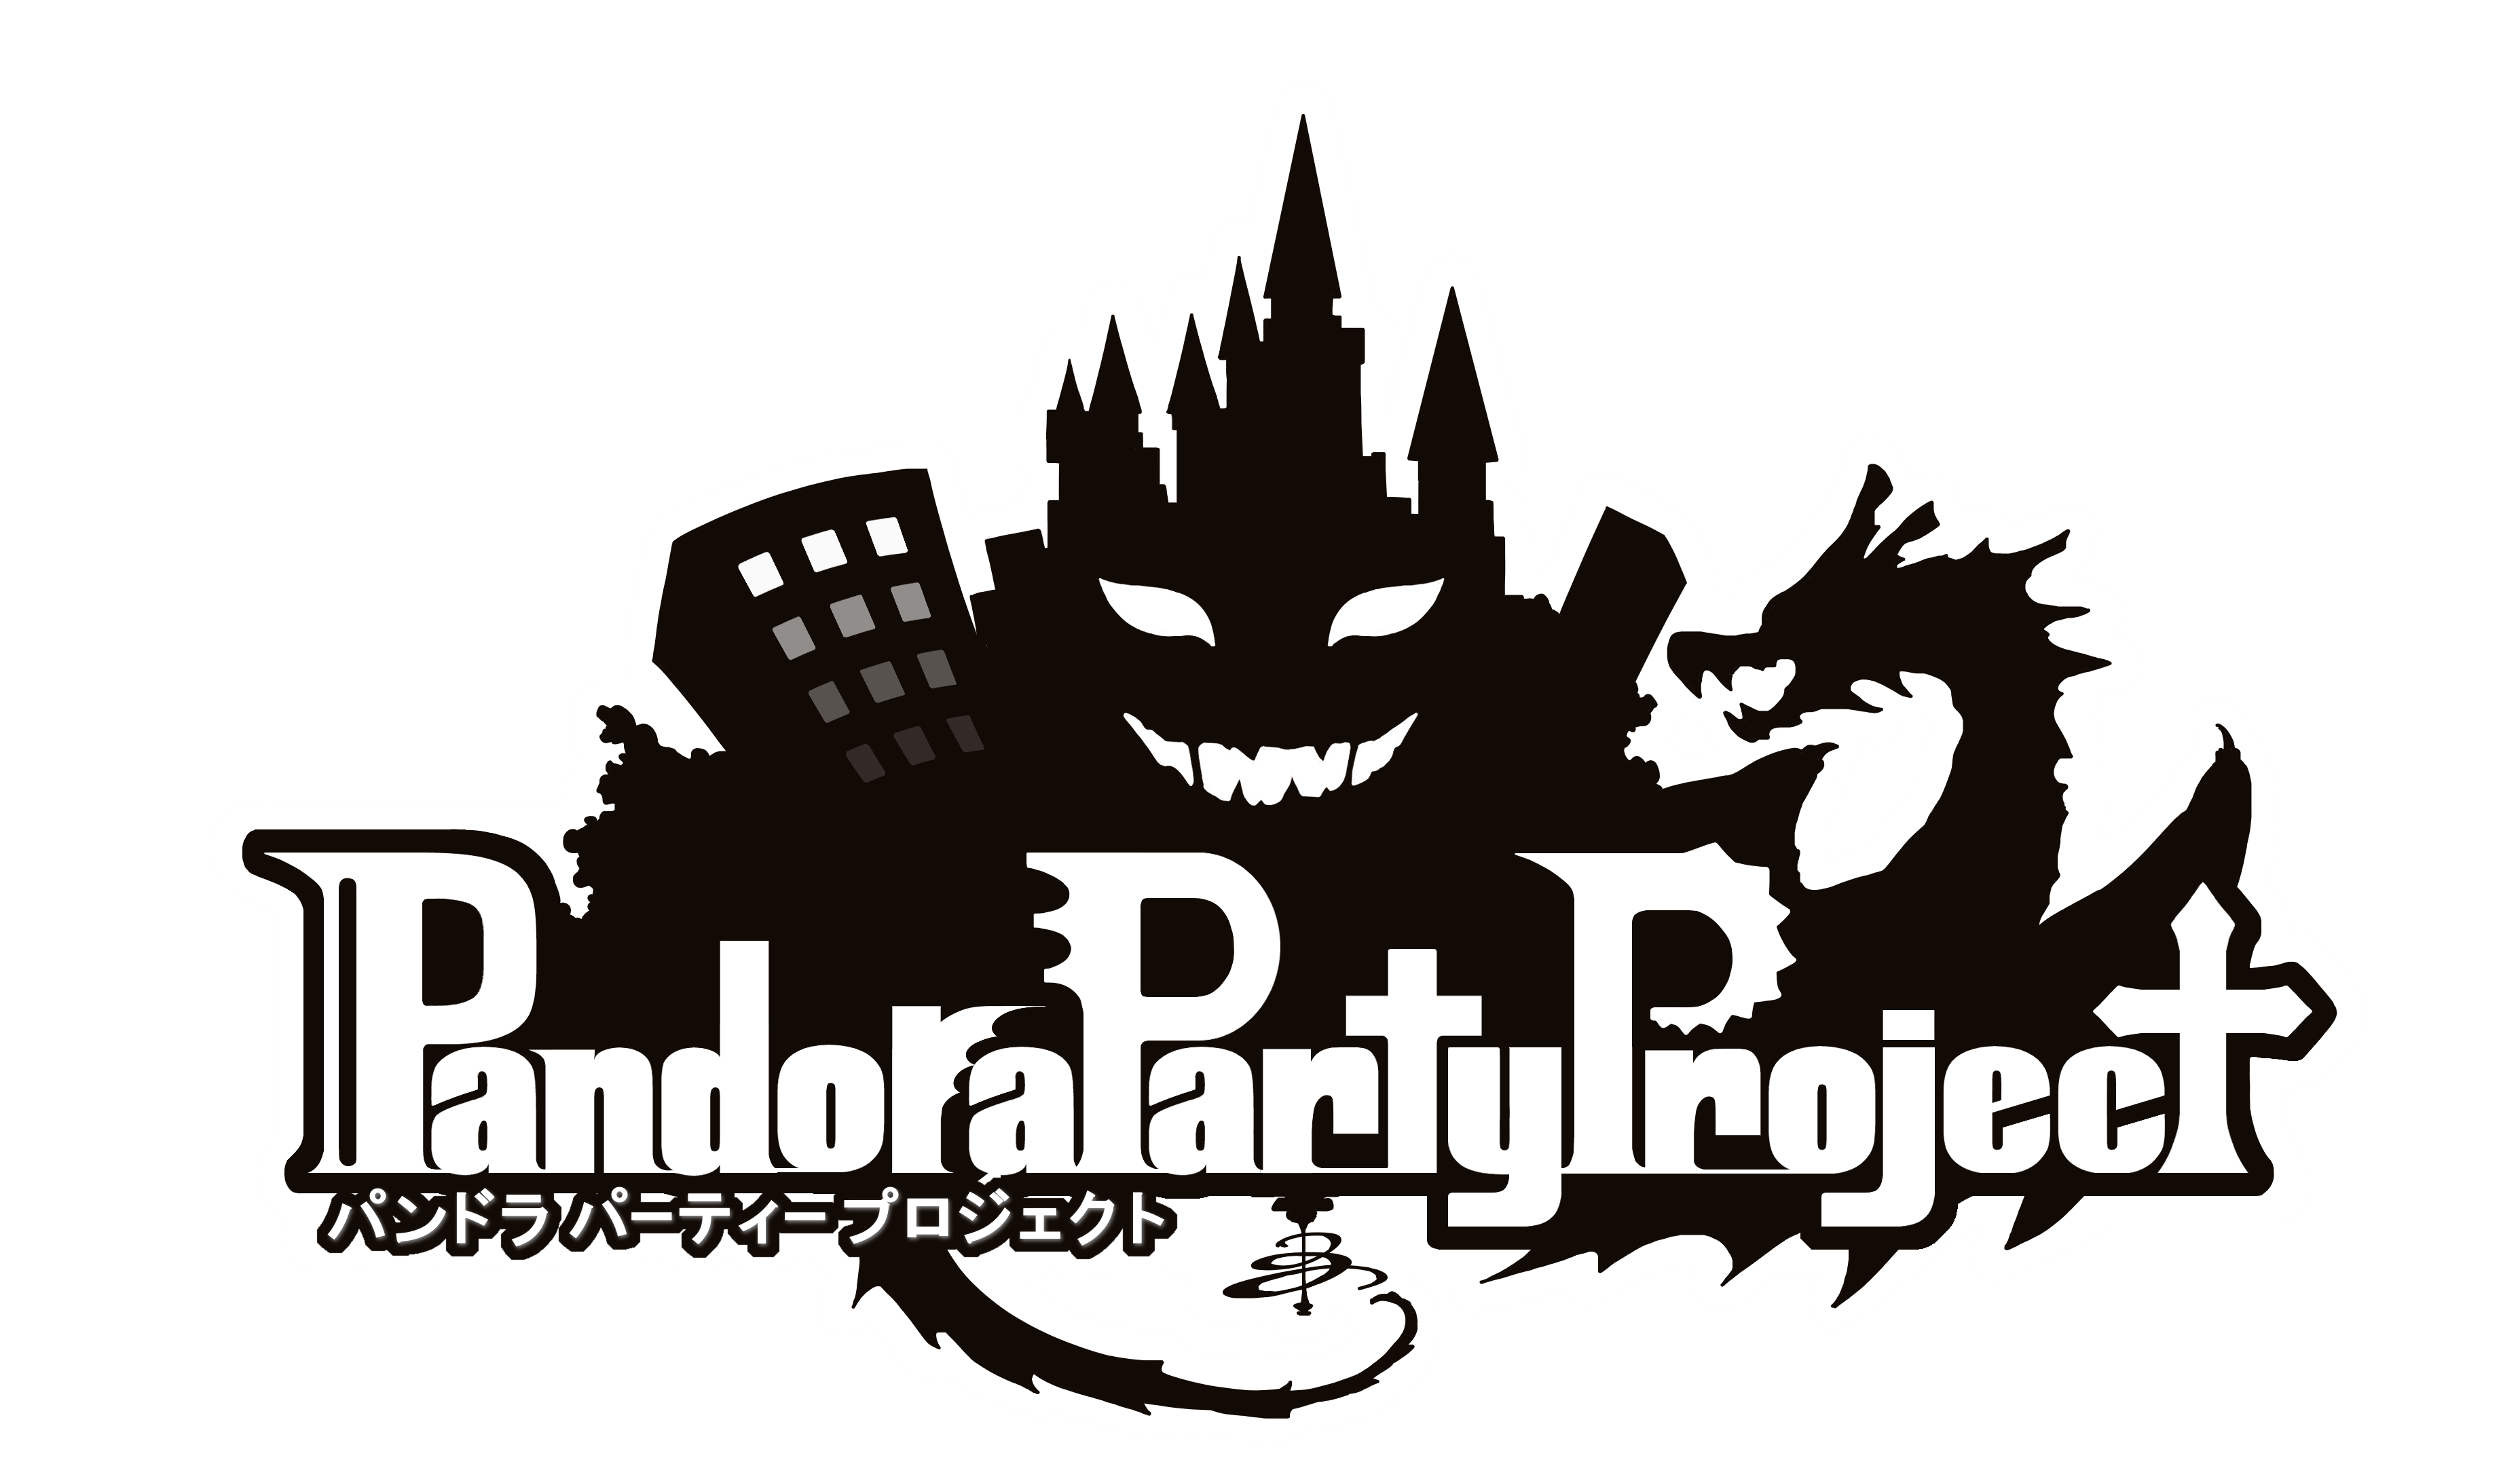 Pandora Party Project Re Version